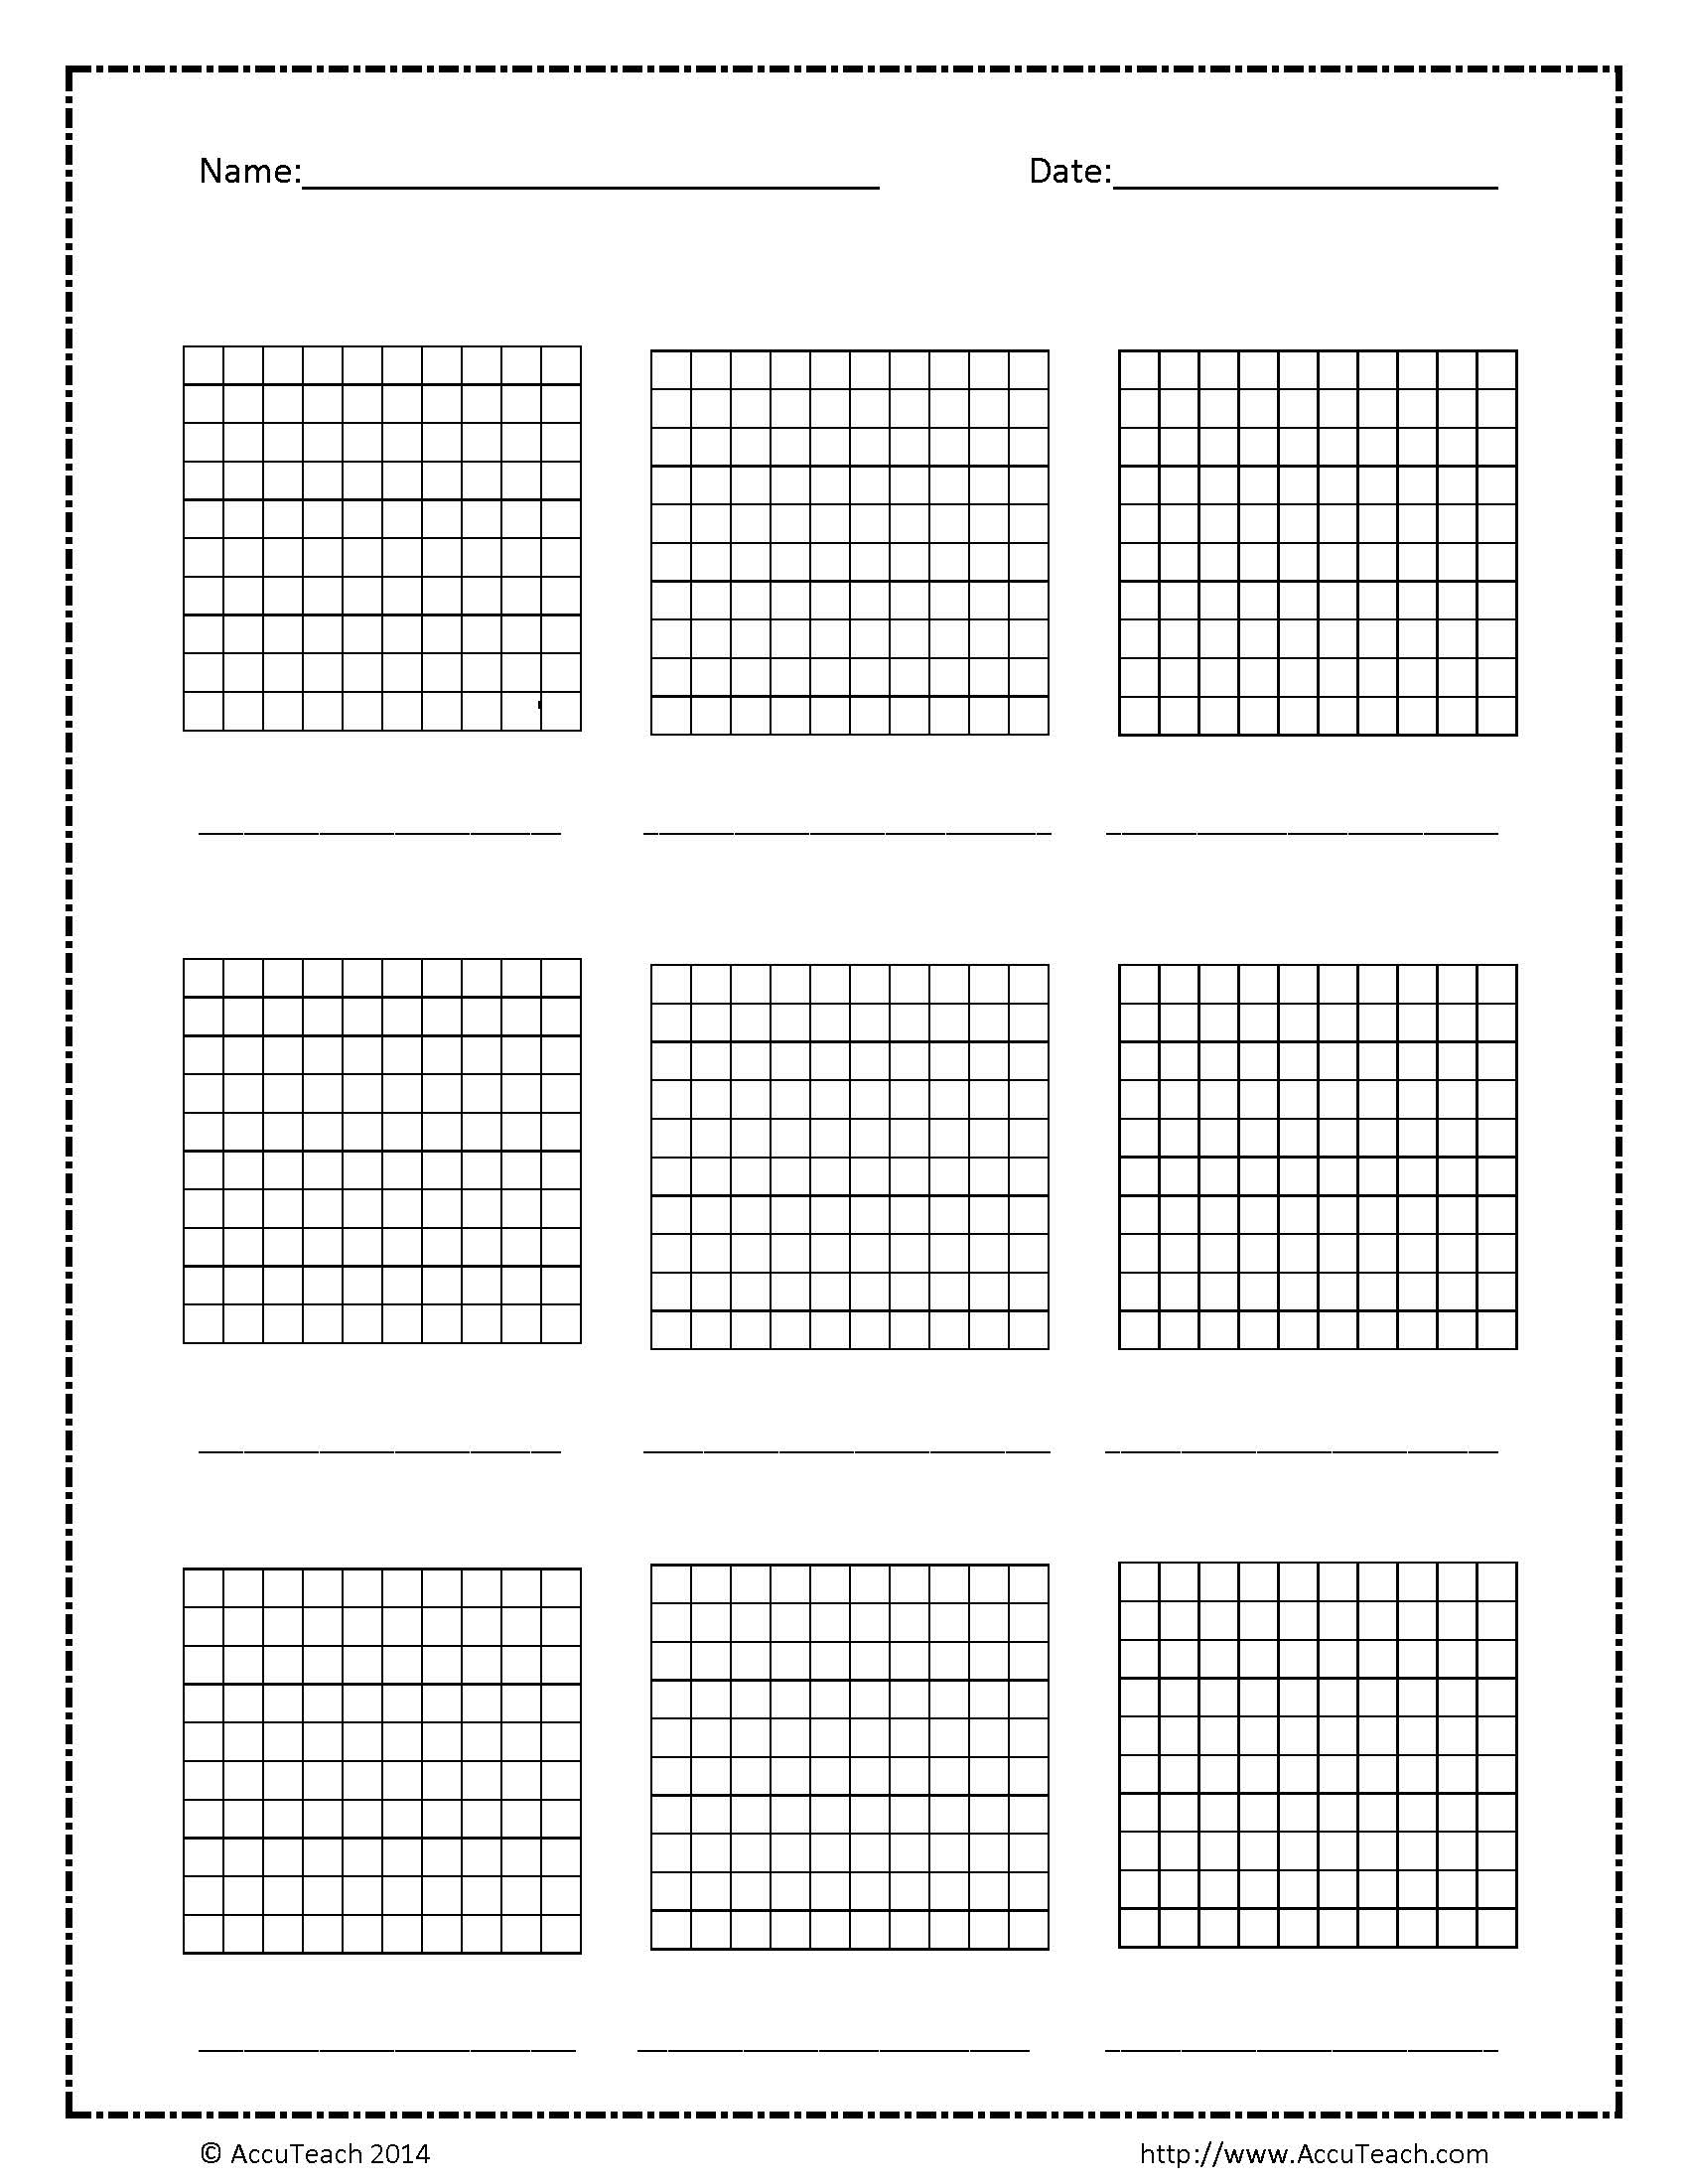 Blank Hundreds Base Ten Grids Image